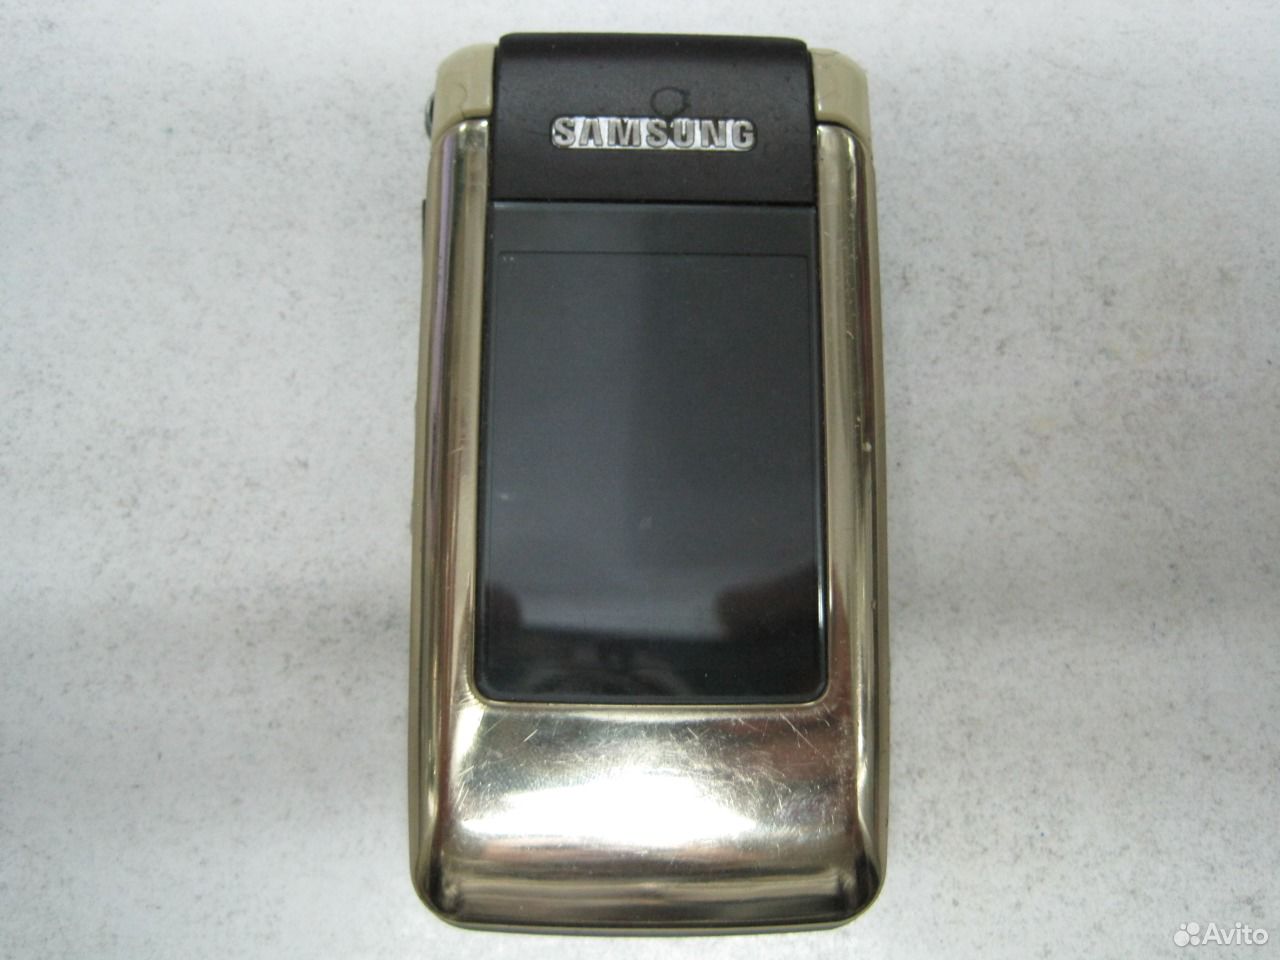 Samsung SGH-g400